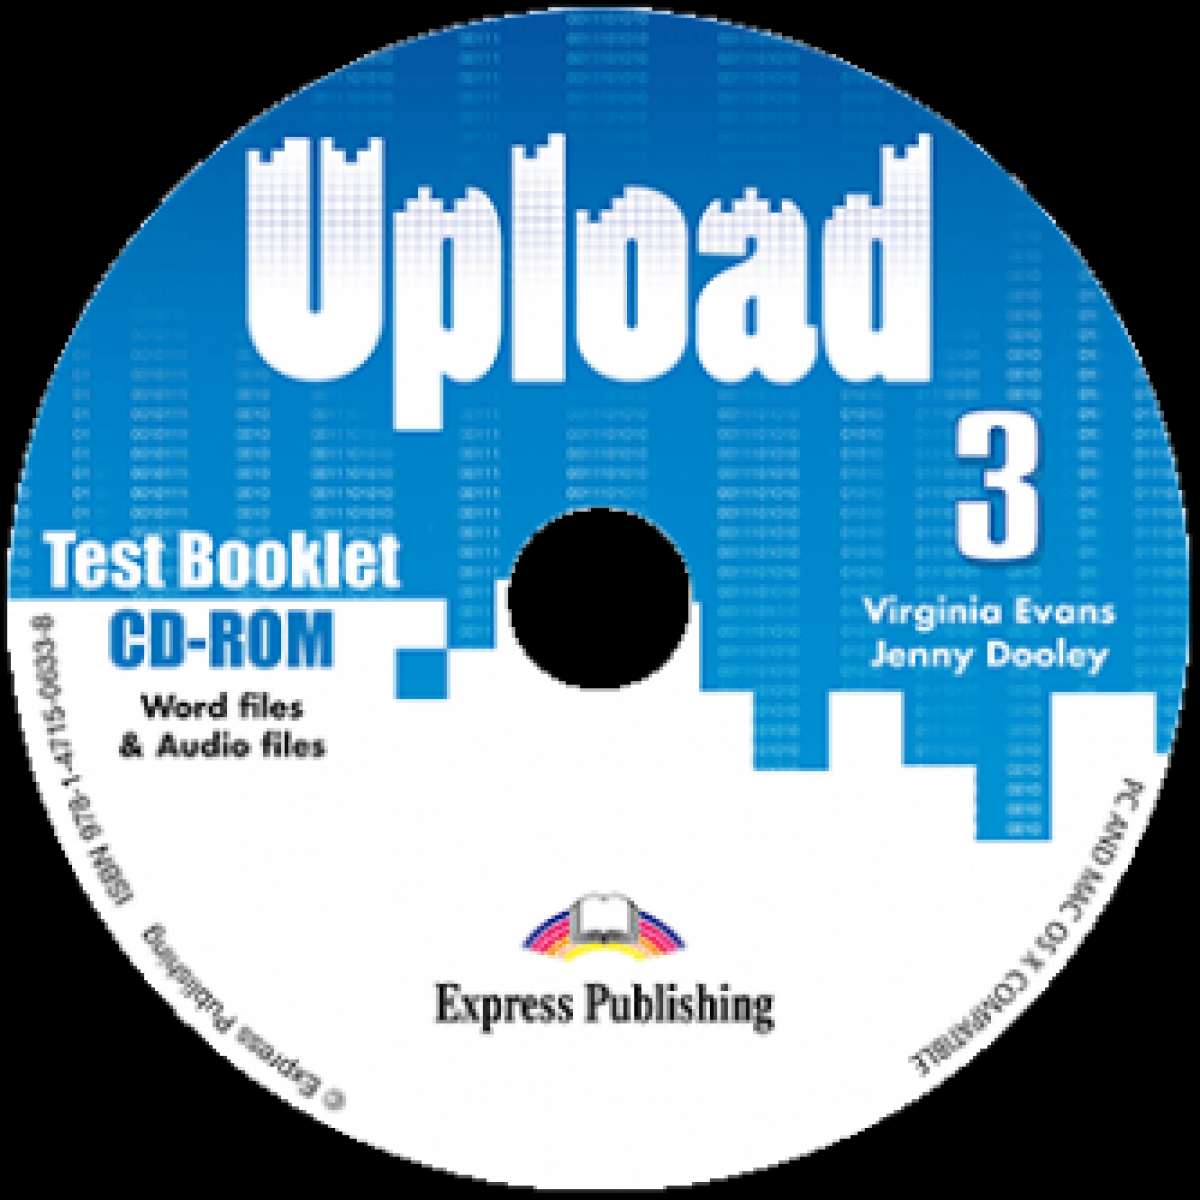 Evans Virginia, Dooley Jenny Audio CD. Upload 3. Test Booklet (International) 